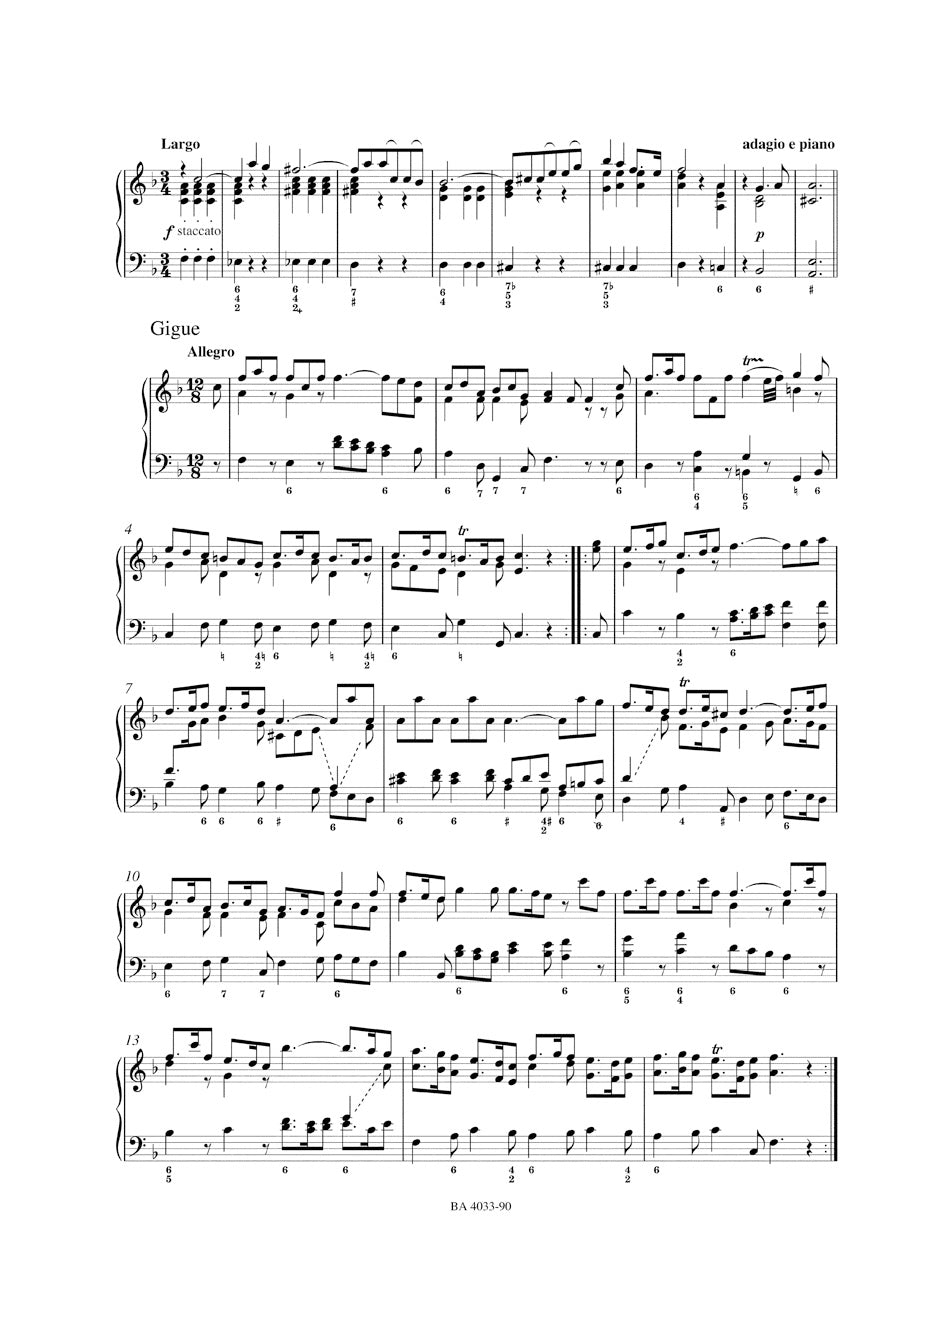 Handel Rinaldo HWV 7a -Opera in three acts- (Version of 1711)